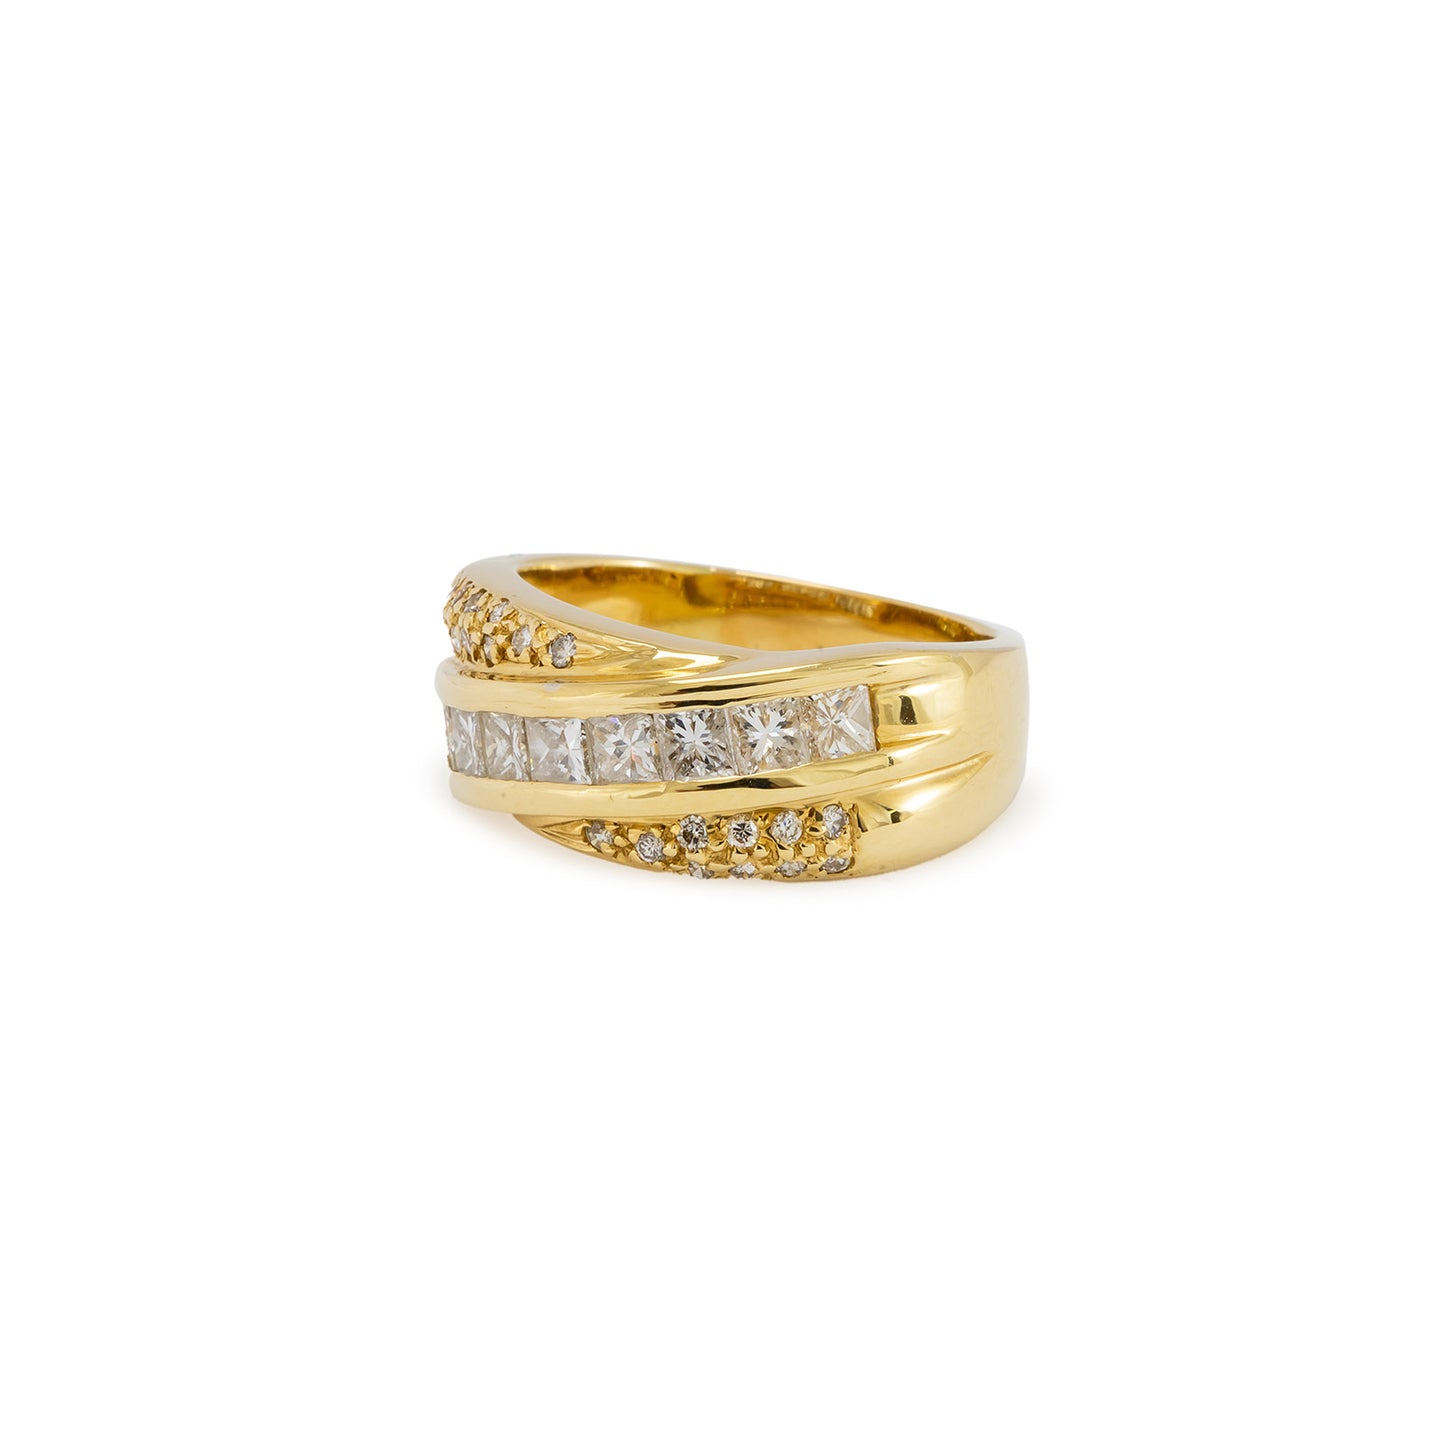 Diamond ring yellow gold 750 18K set women's ring diamond jewelry gold ring 